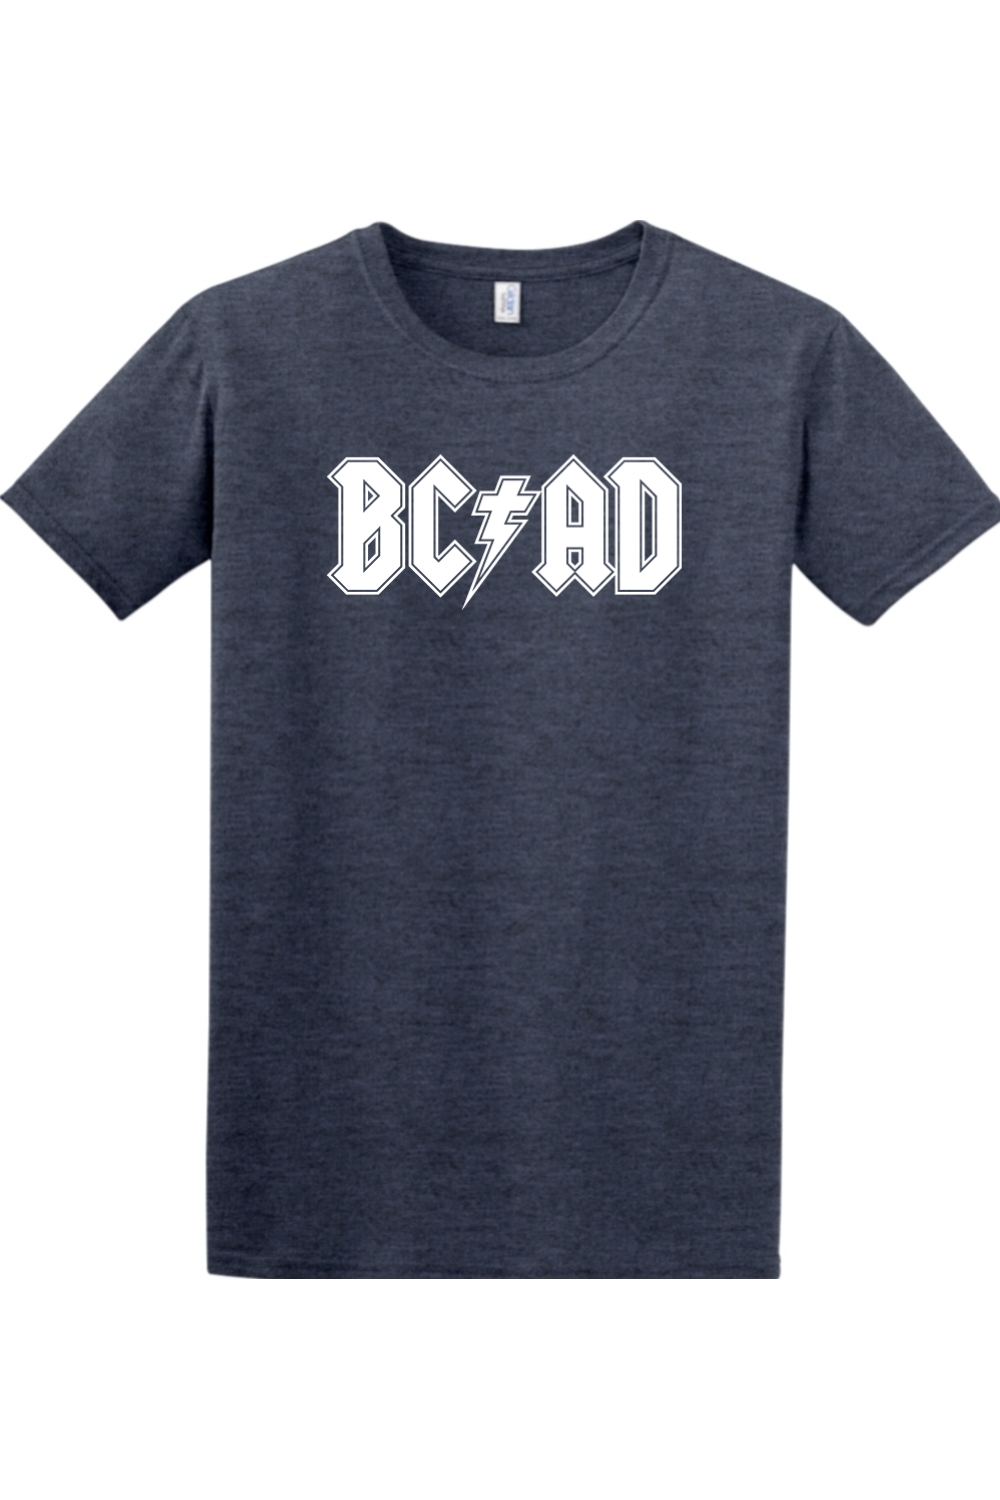 BCAD Adult T-Shirt